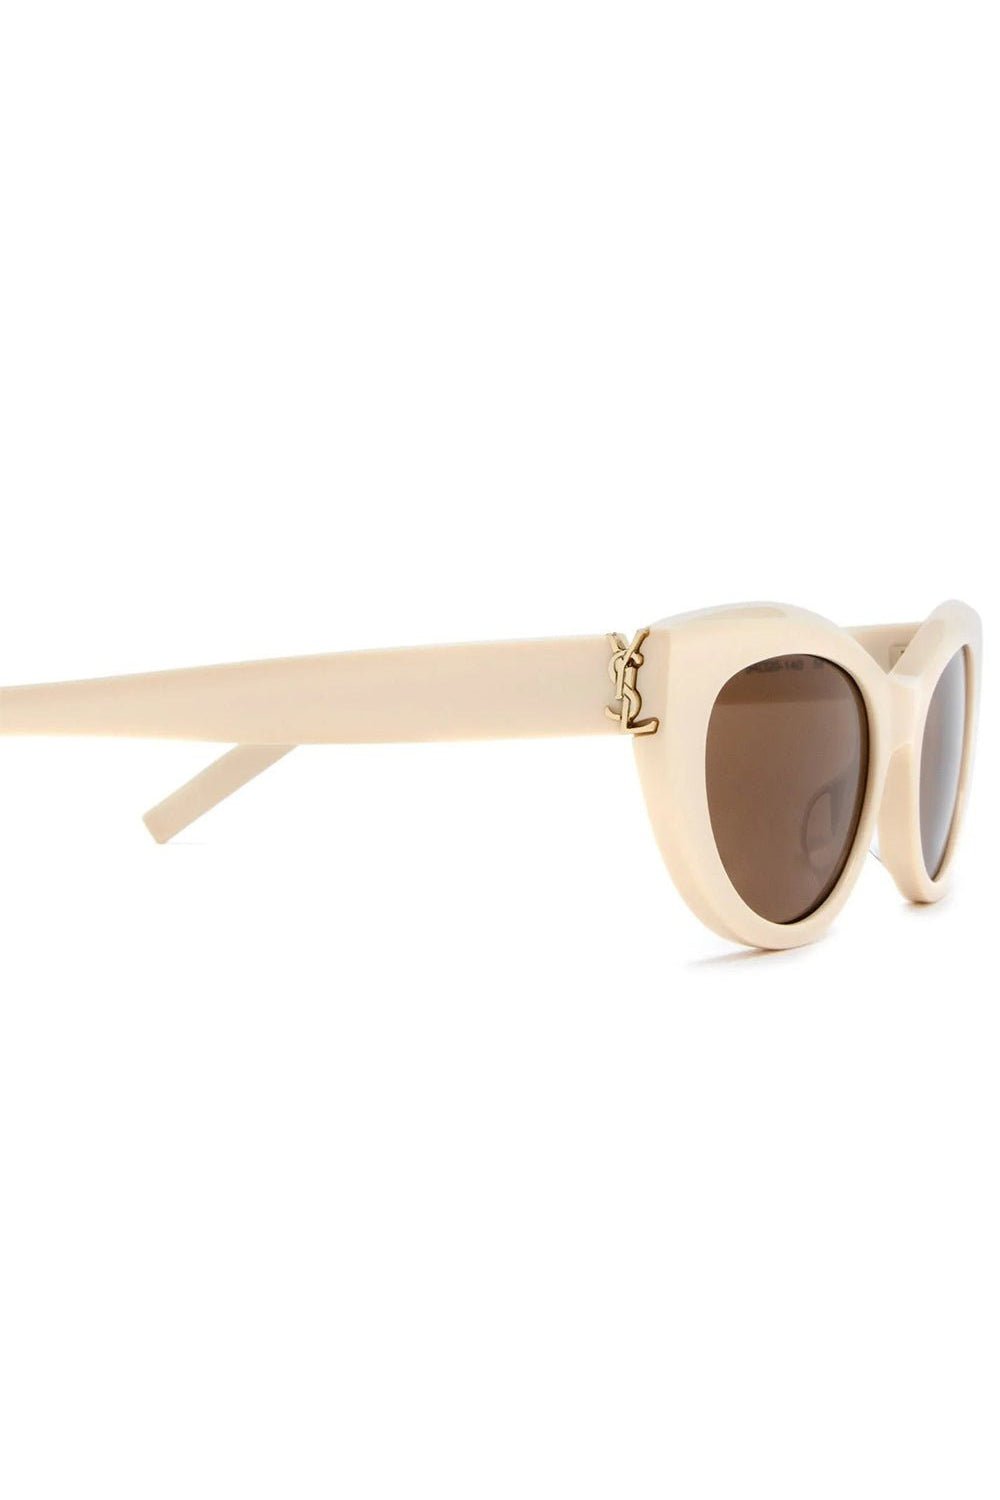 SAINT LAURENT-Acetate Cat-Eye Sunglasses-IVORY/IVORY/BROWN